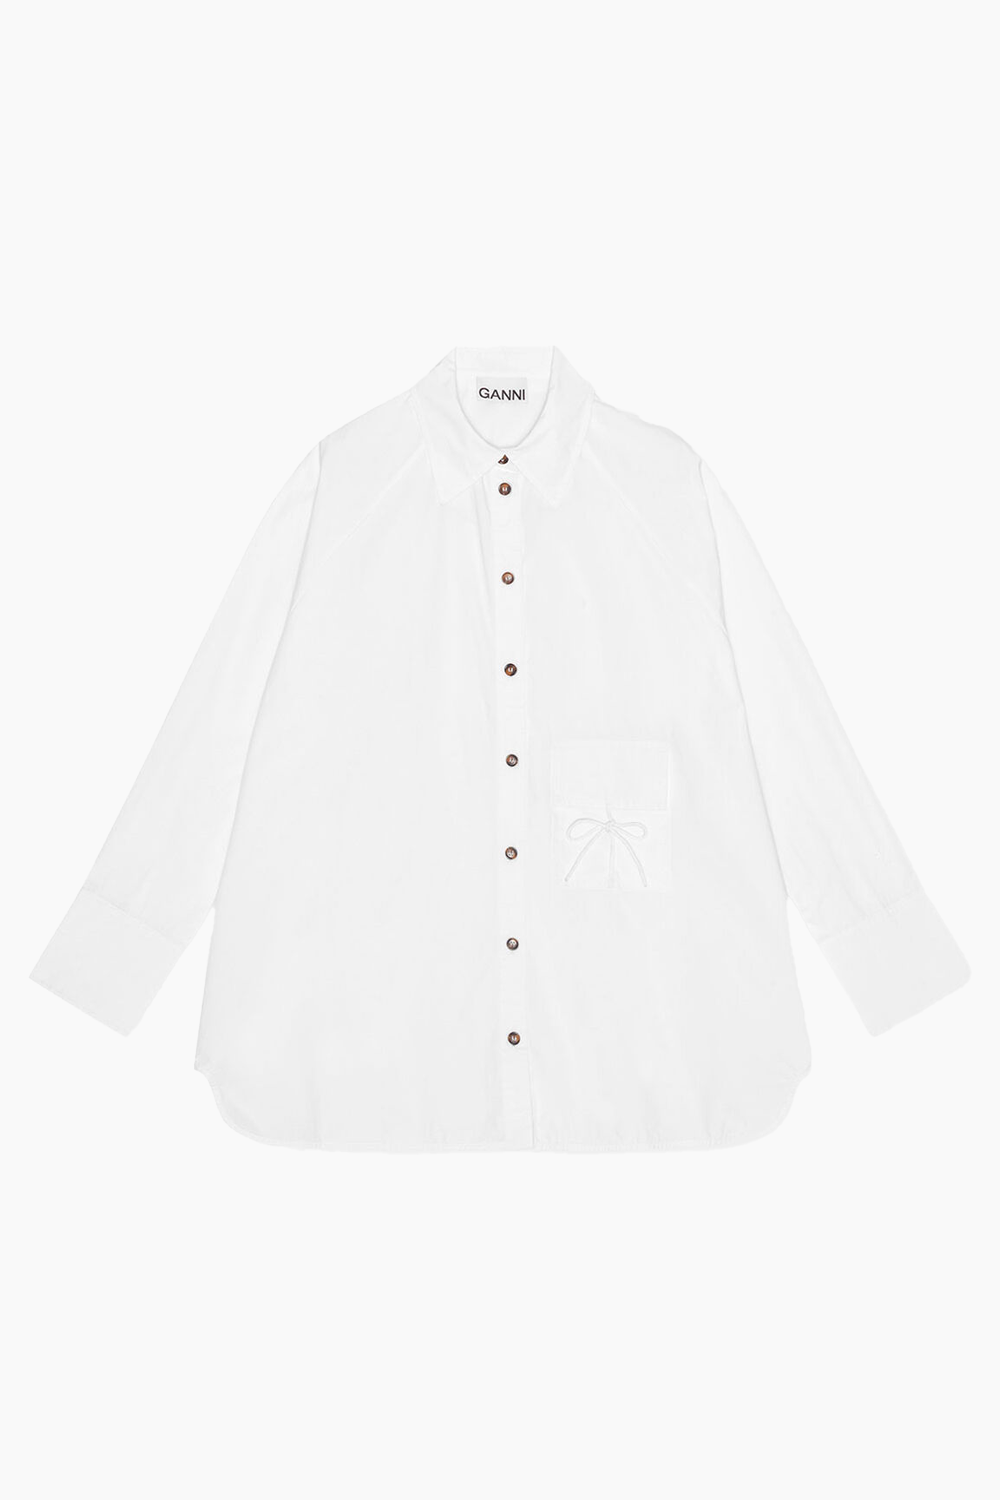 Billede af Cotton Poplin Oversize Raglan Shirt F9073 - Bright White - GANNI - Hvid XXS/XS